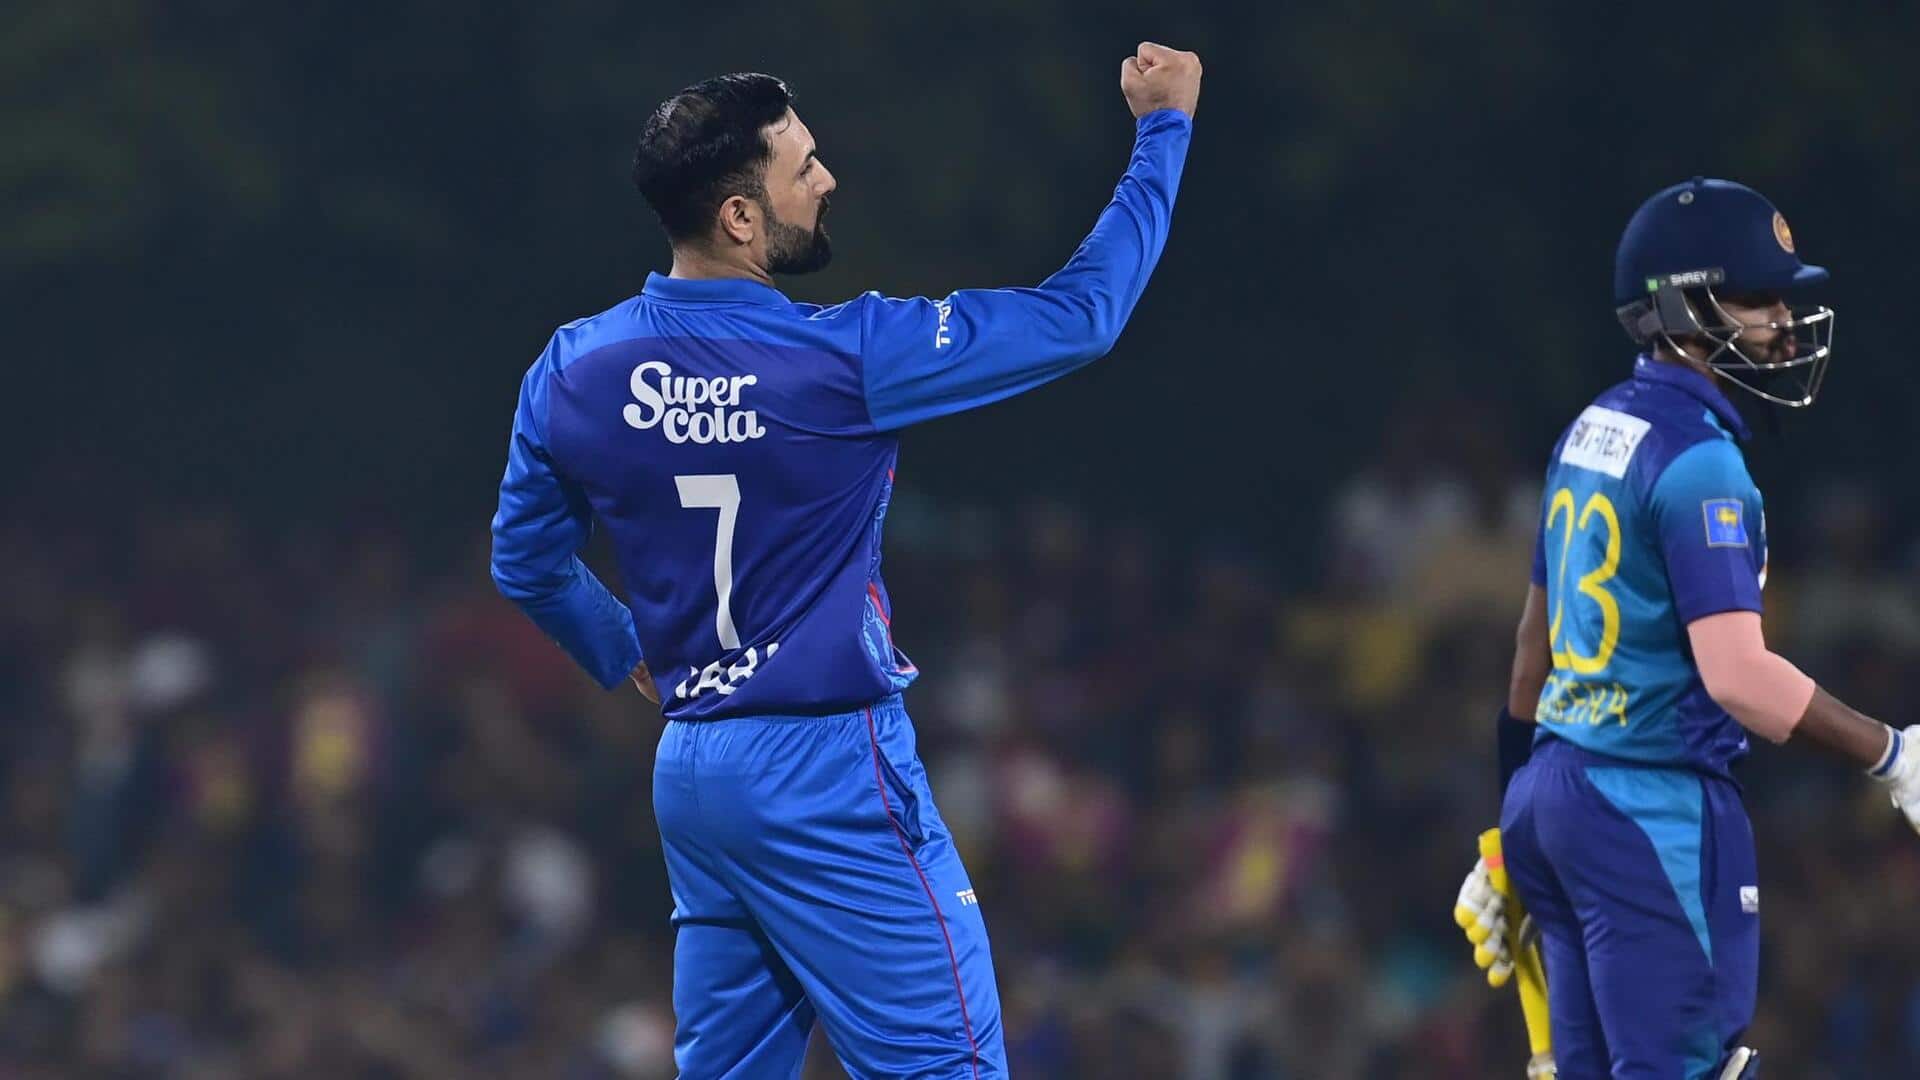 3rd T20I, Afghanistan beat Sri Lanka in high-scoring thriller: Stats